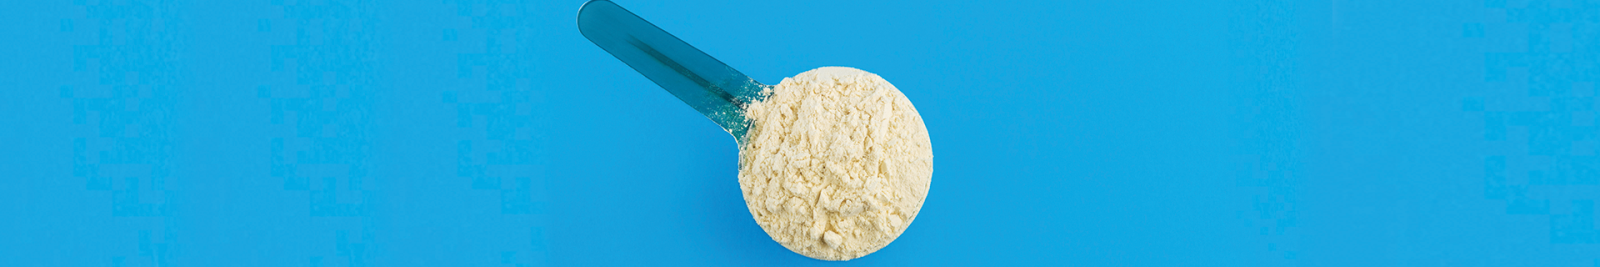 image of avonol powder